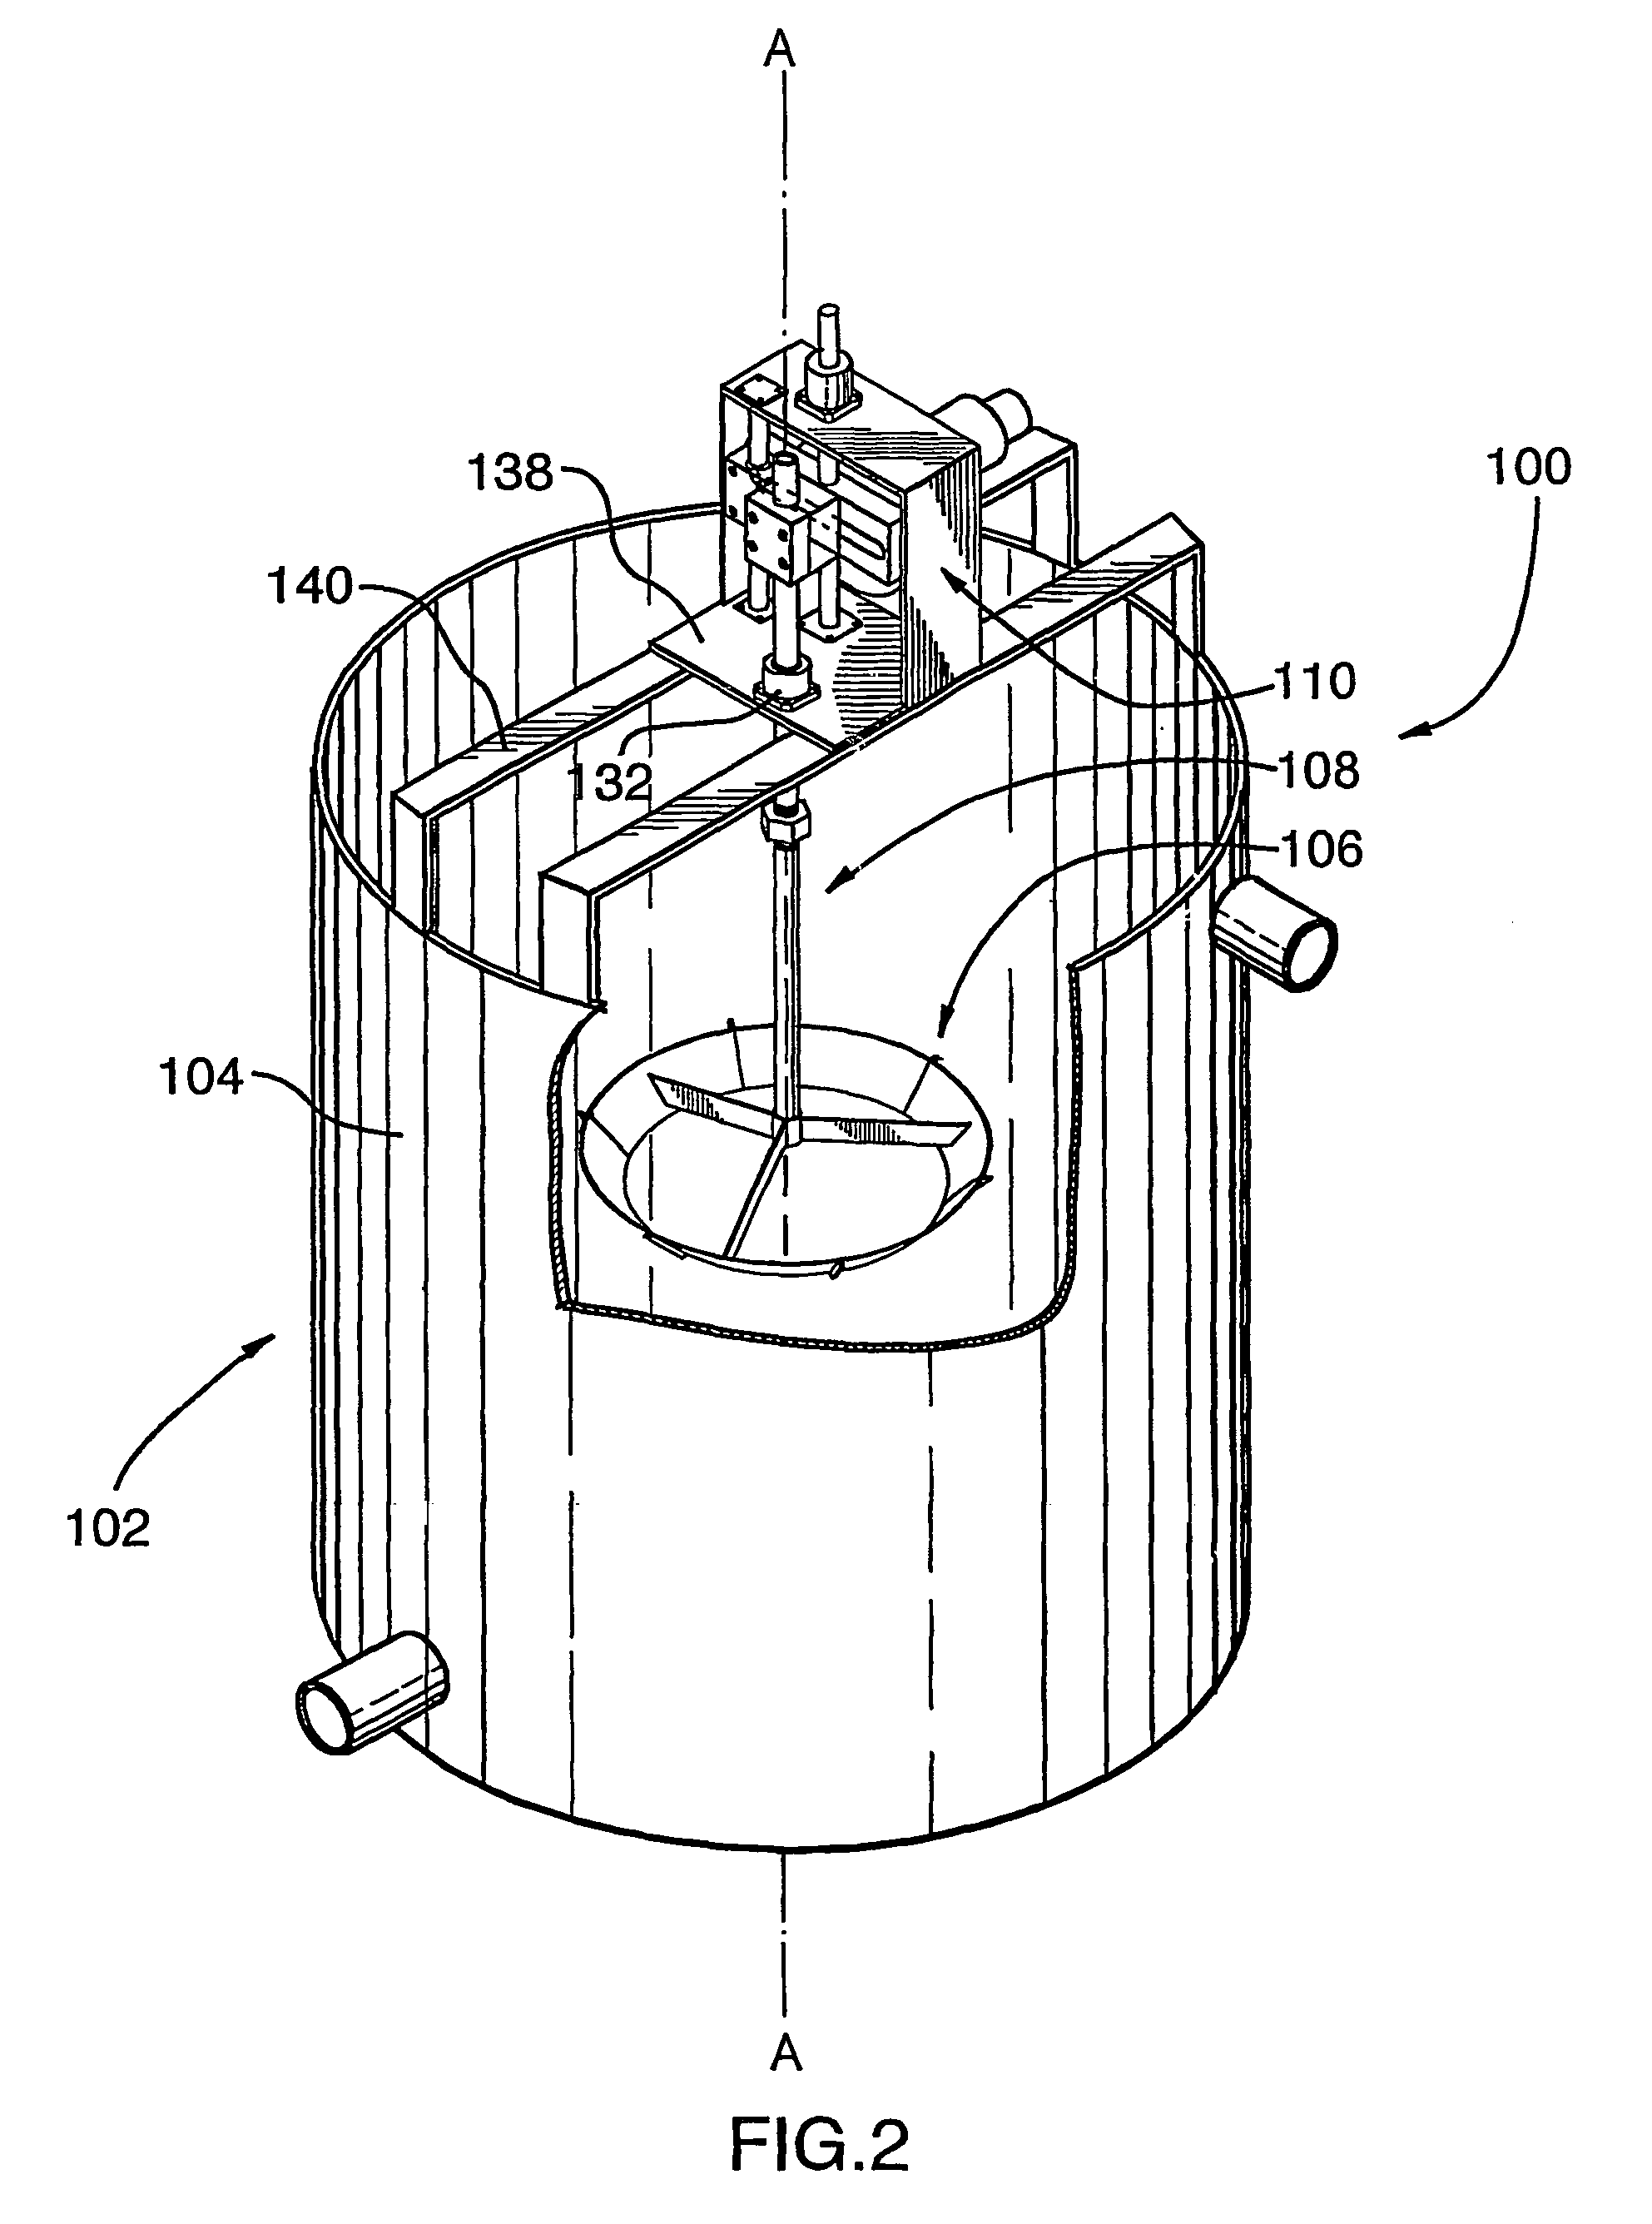 Fluid mixing apparatus